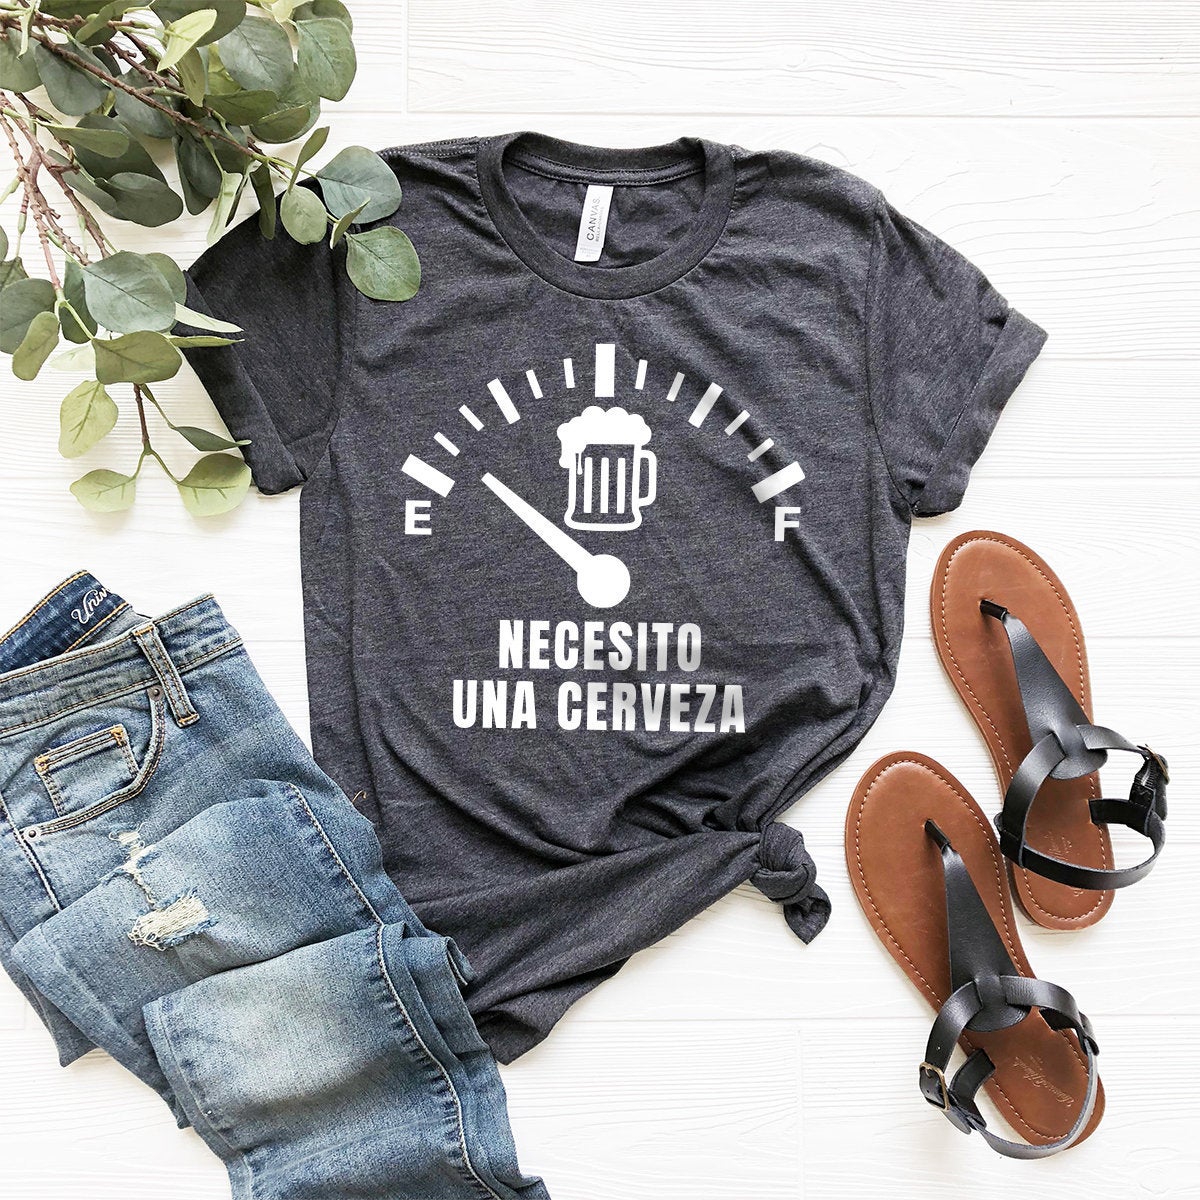 Necesito Una Cervaza Shirt, Funny Beer Shirt, Drinking Shirt, Drink Beer Shirt, Drinking Party T Shirt, Spanish Quote Shirt, Beer T-Shirt - Fastdeliverytees.com